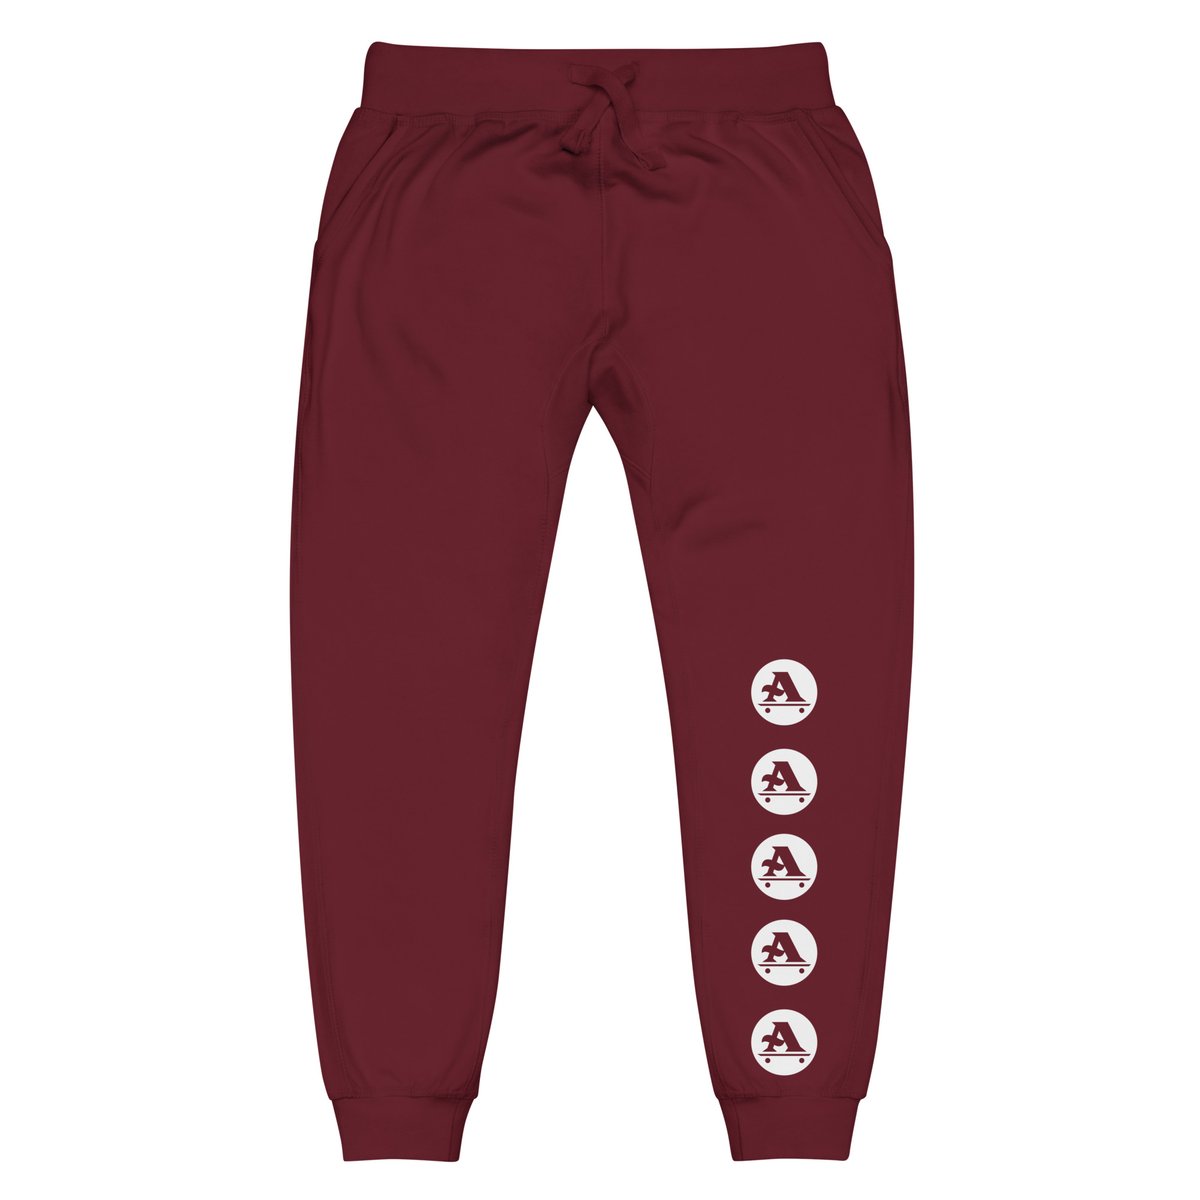 Vs Maroon sweatpants with logo